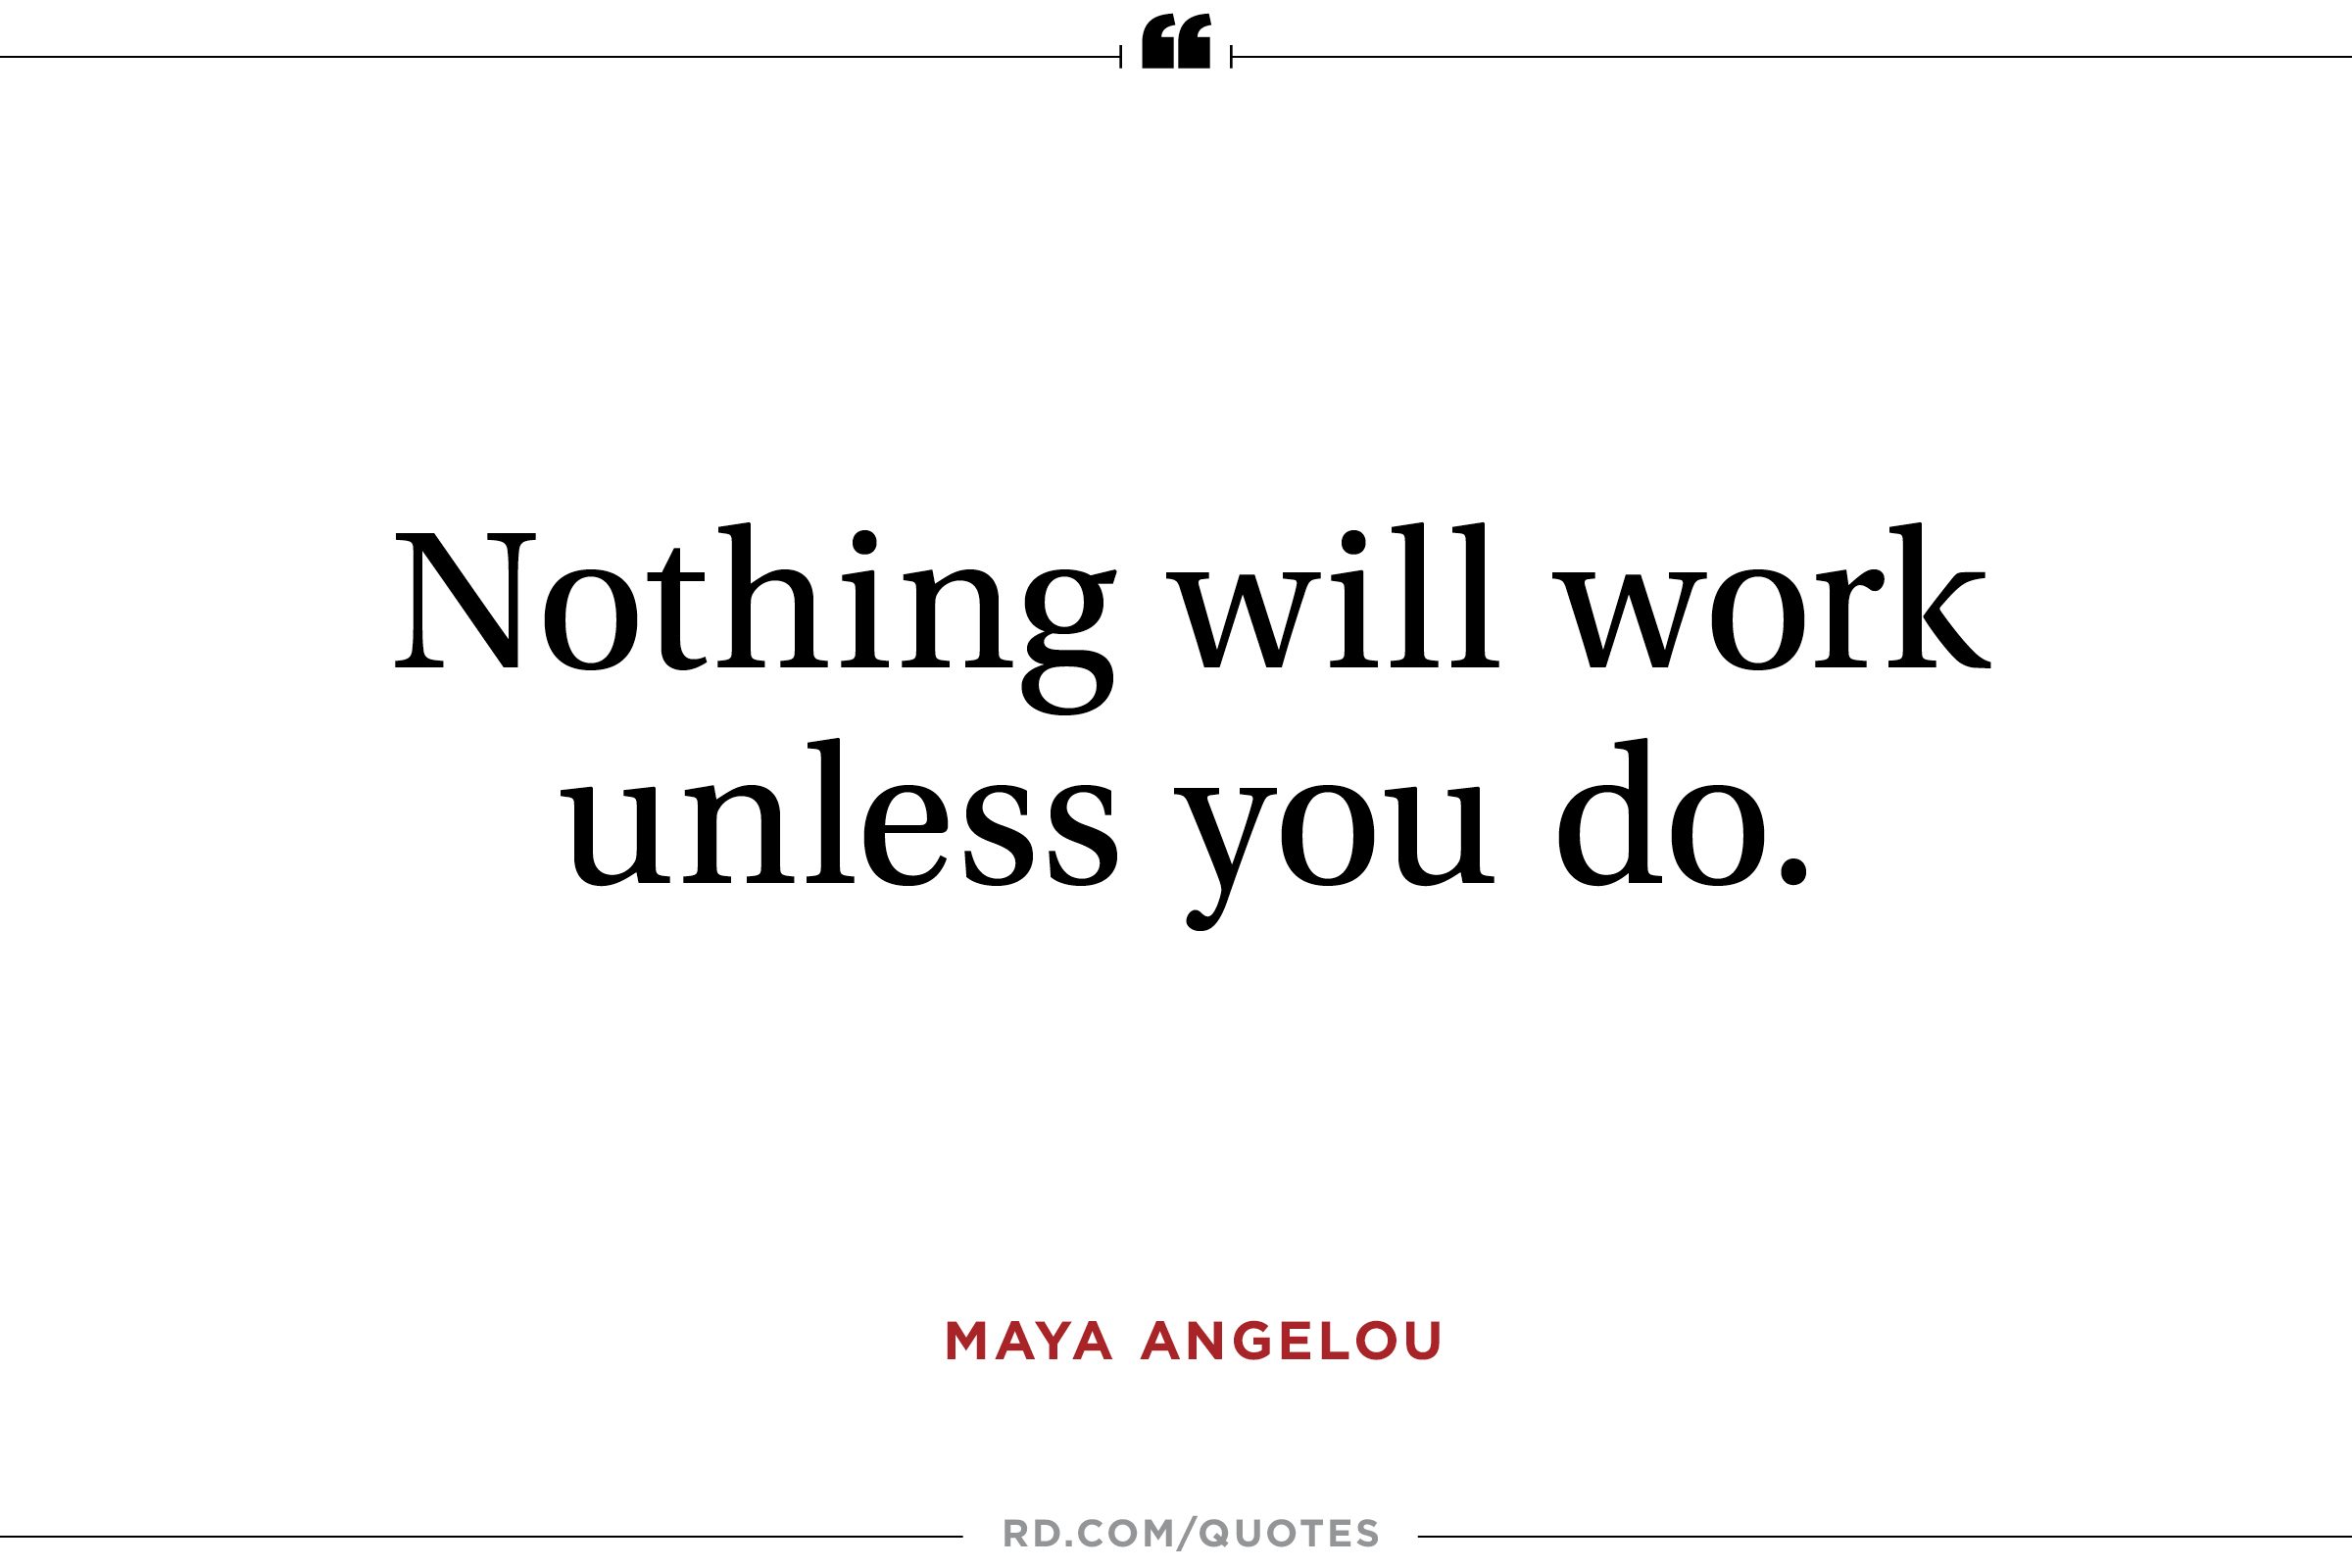 Laura Formisano unless you do —Maya Angelou